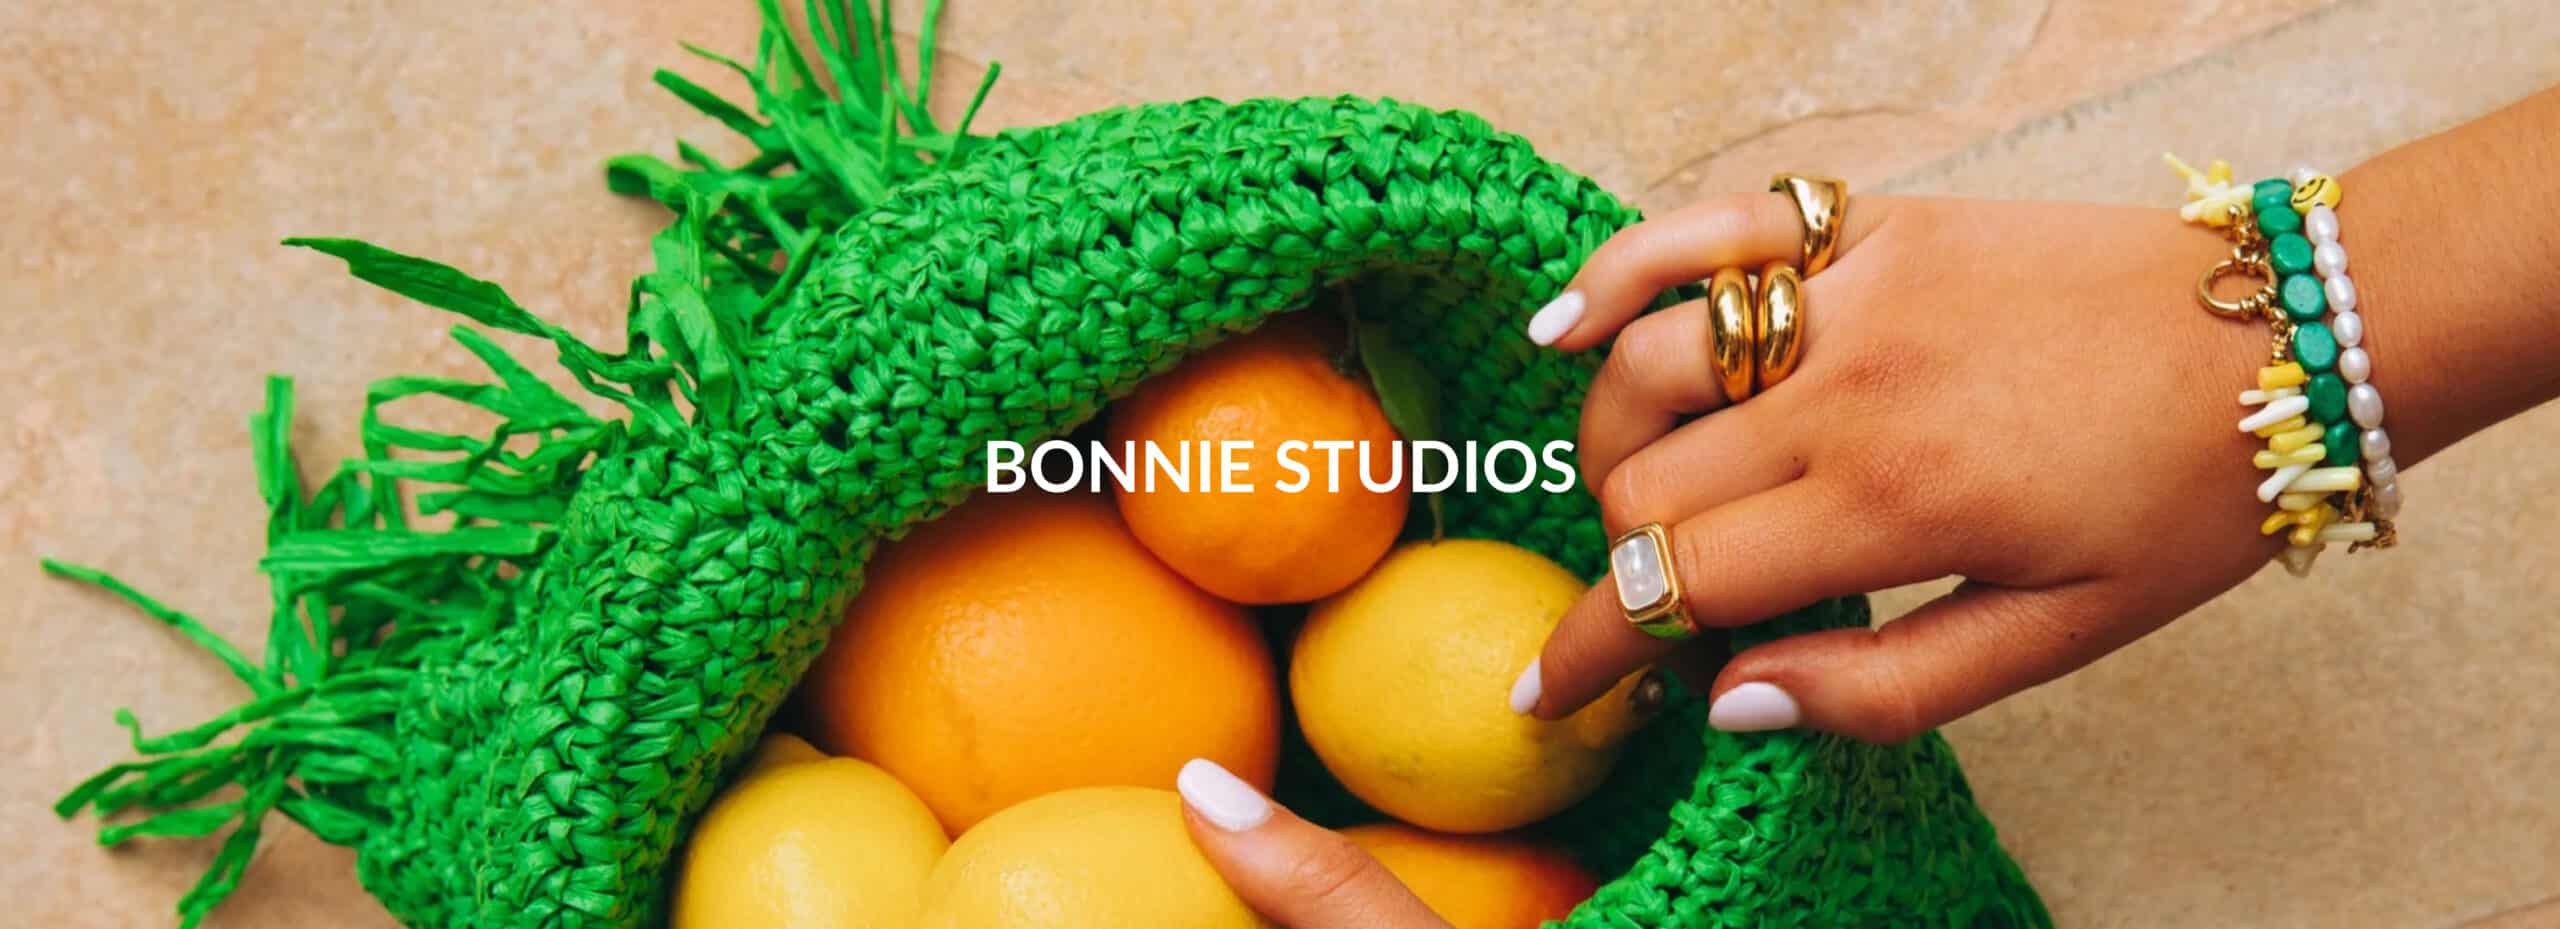 Bonnie Studios